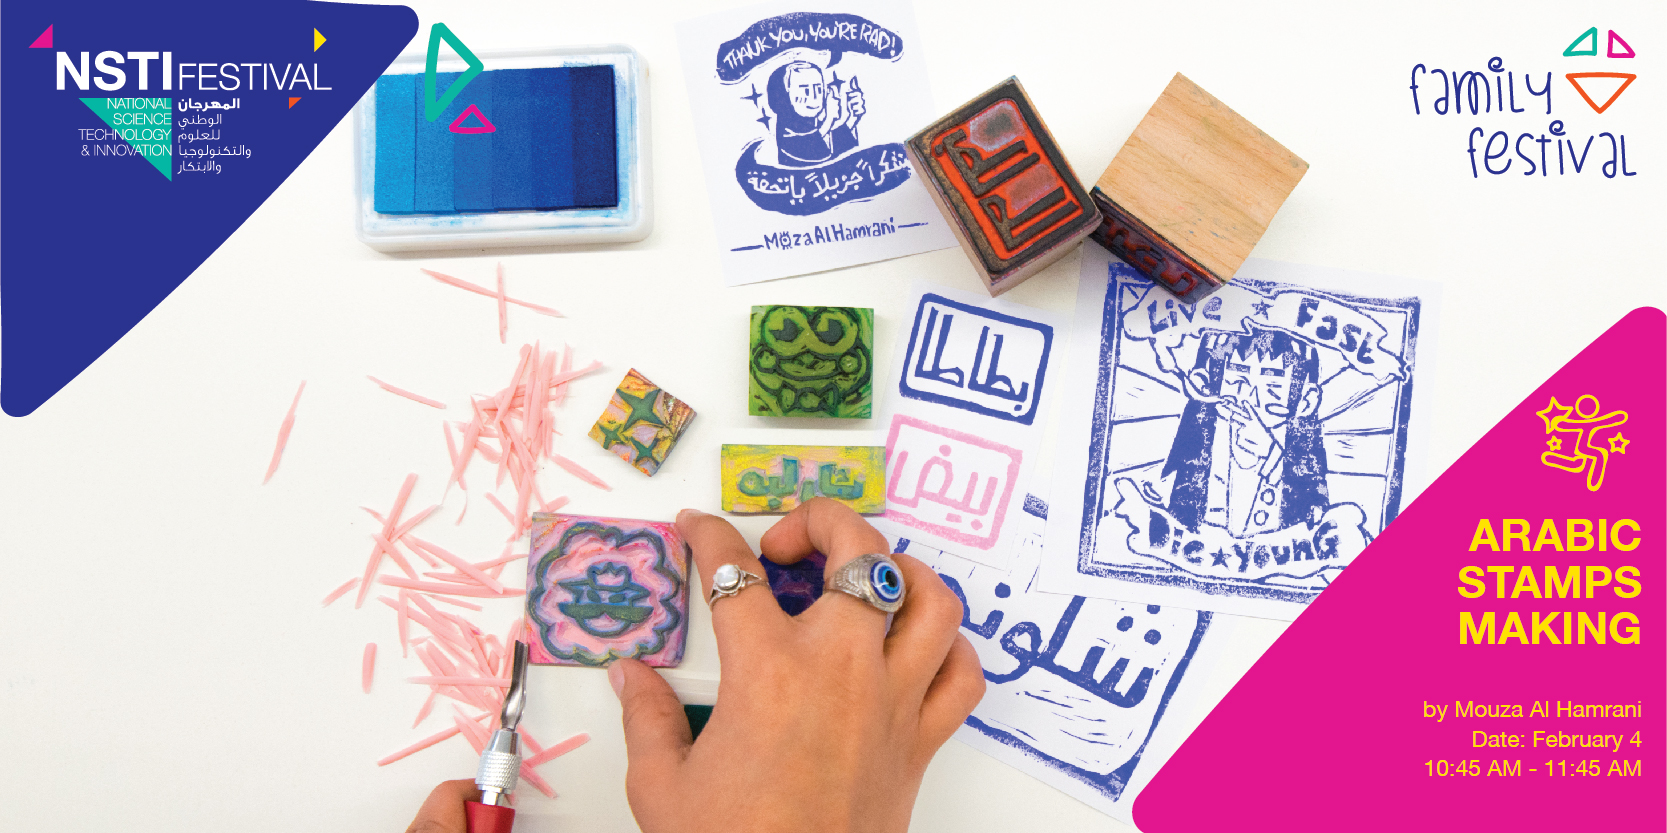 Arabic Stamps Making Workshop by Mouza Al Hamrani